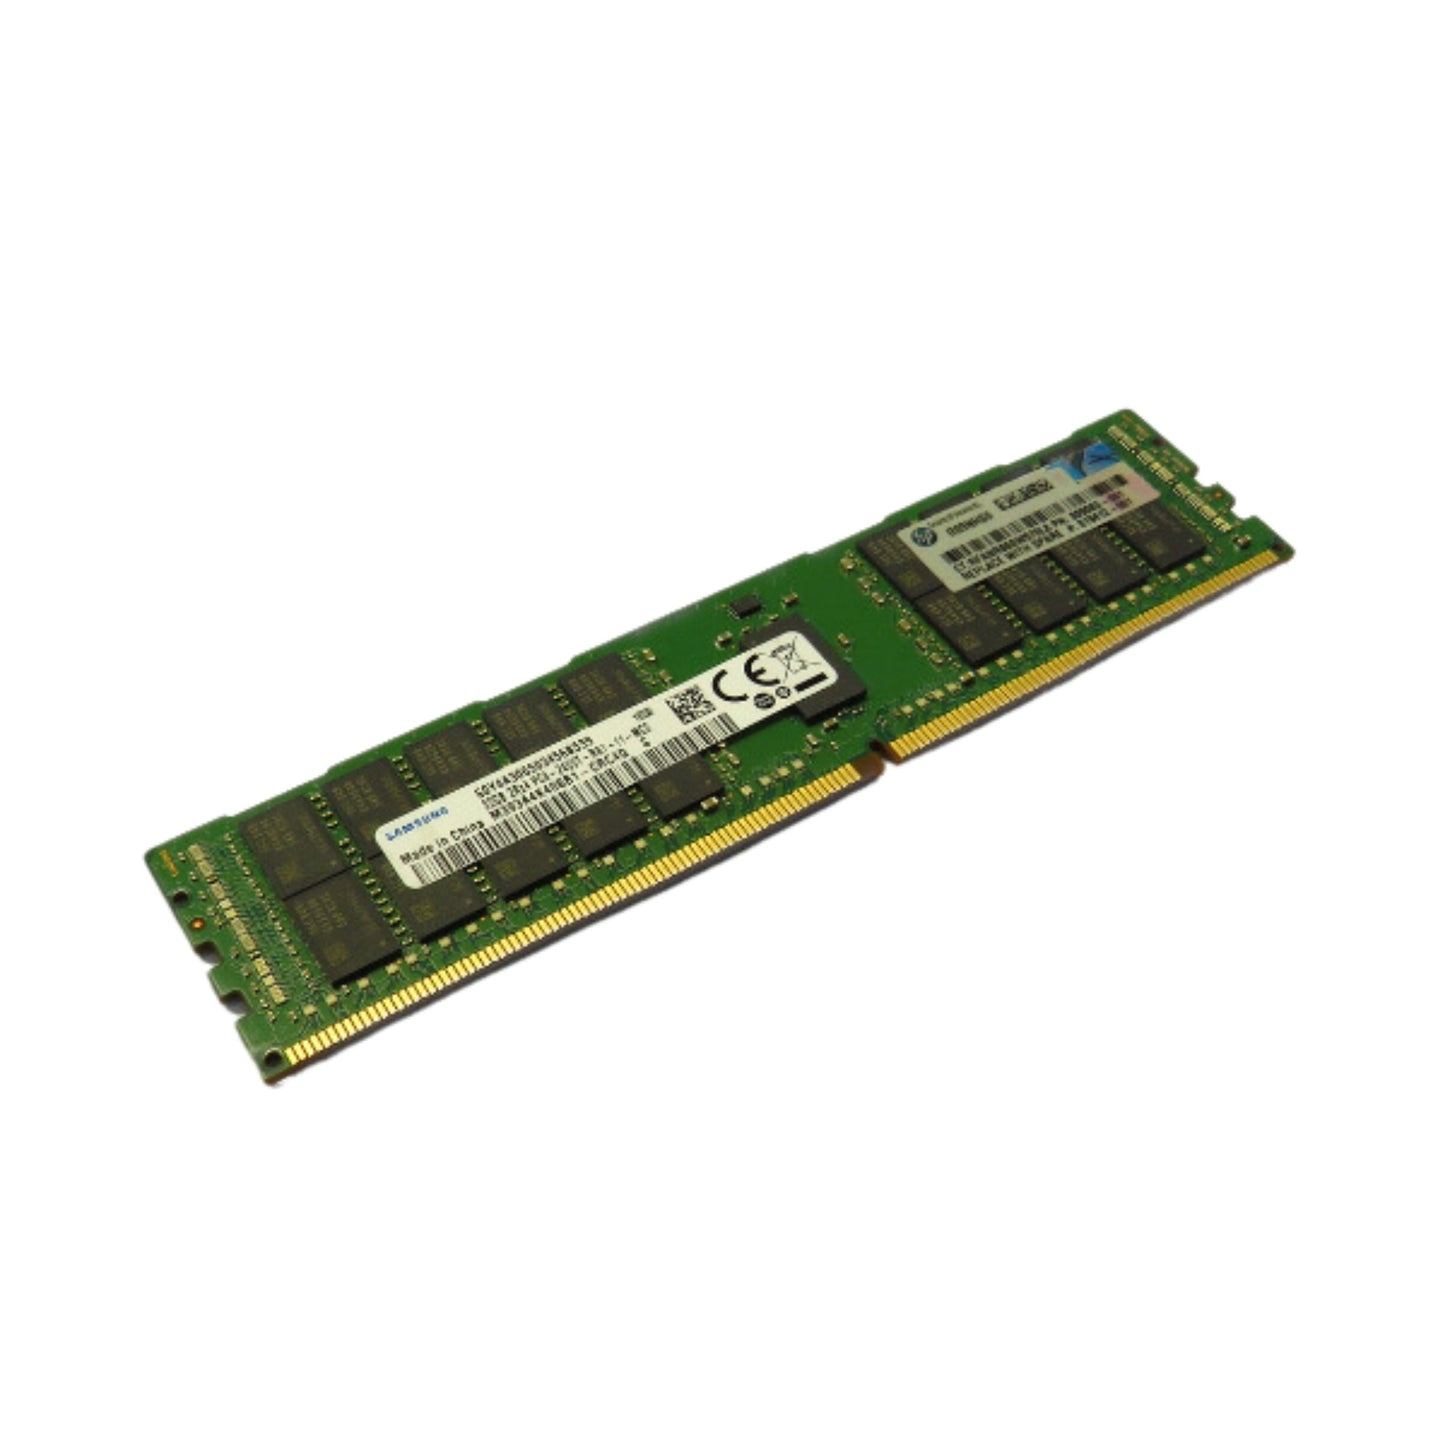 HP 819412-001 809083-091 32GB 2Rx4 PC4-19200 DDR4 2400MHz RDIMM Server Memory (Refurbished)